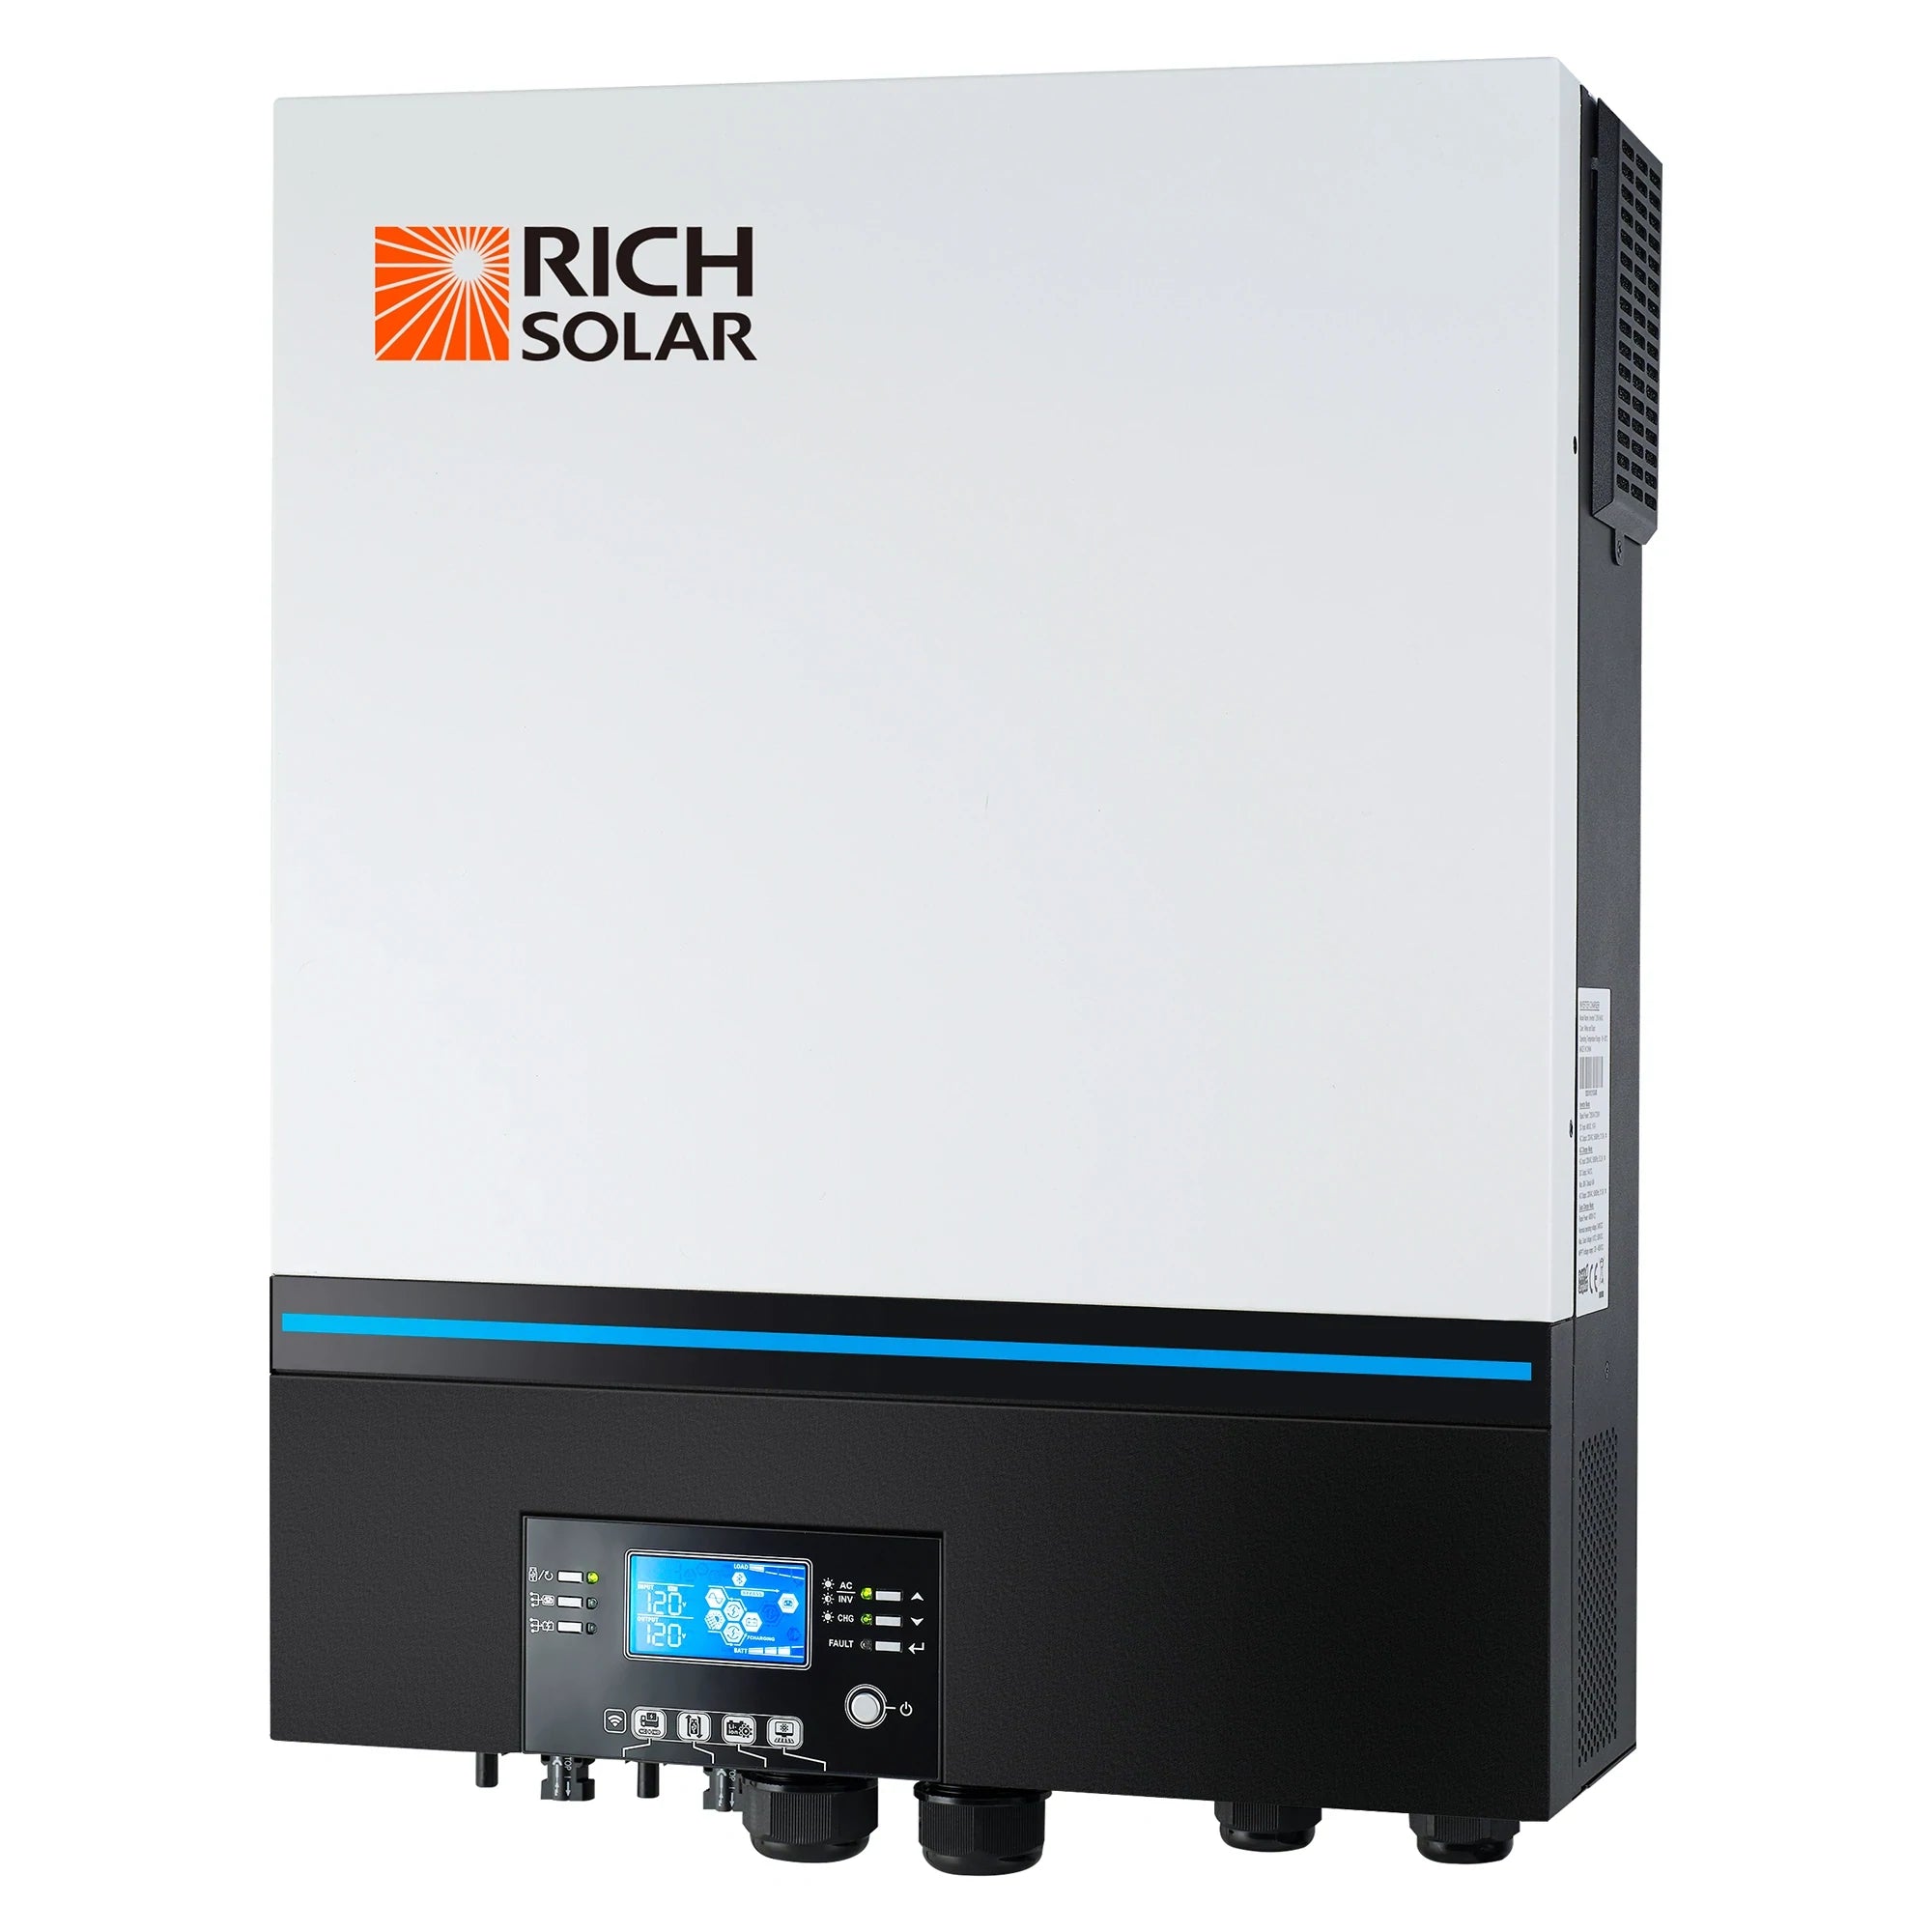 Rich Solar 4000W 48V 240VAC Cabin Kit